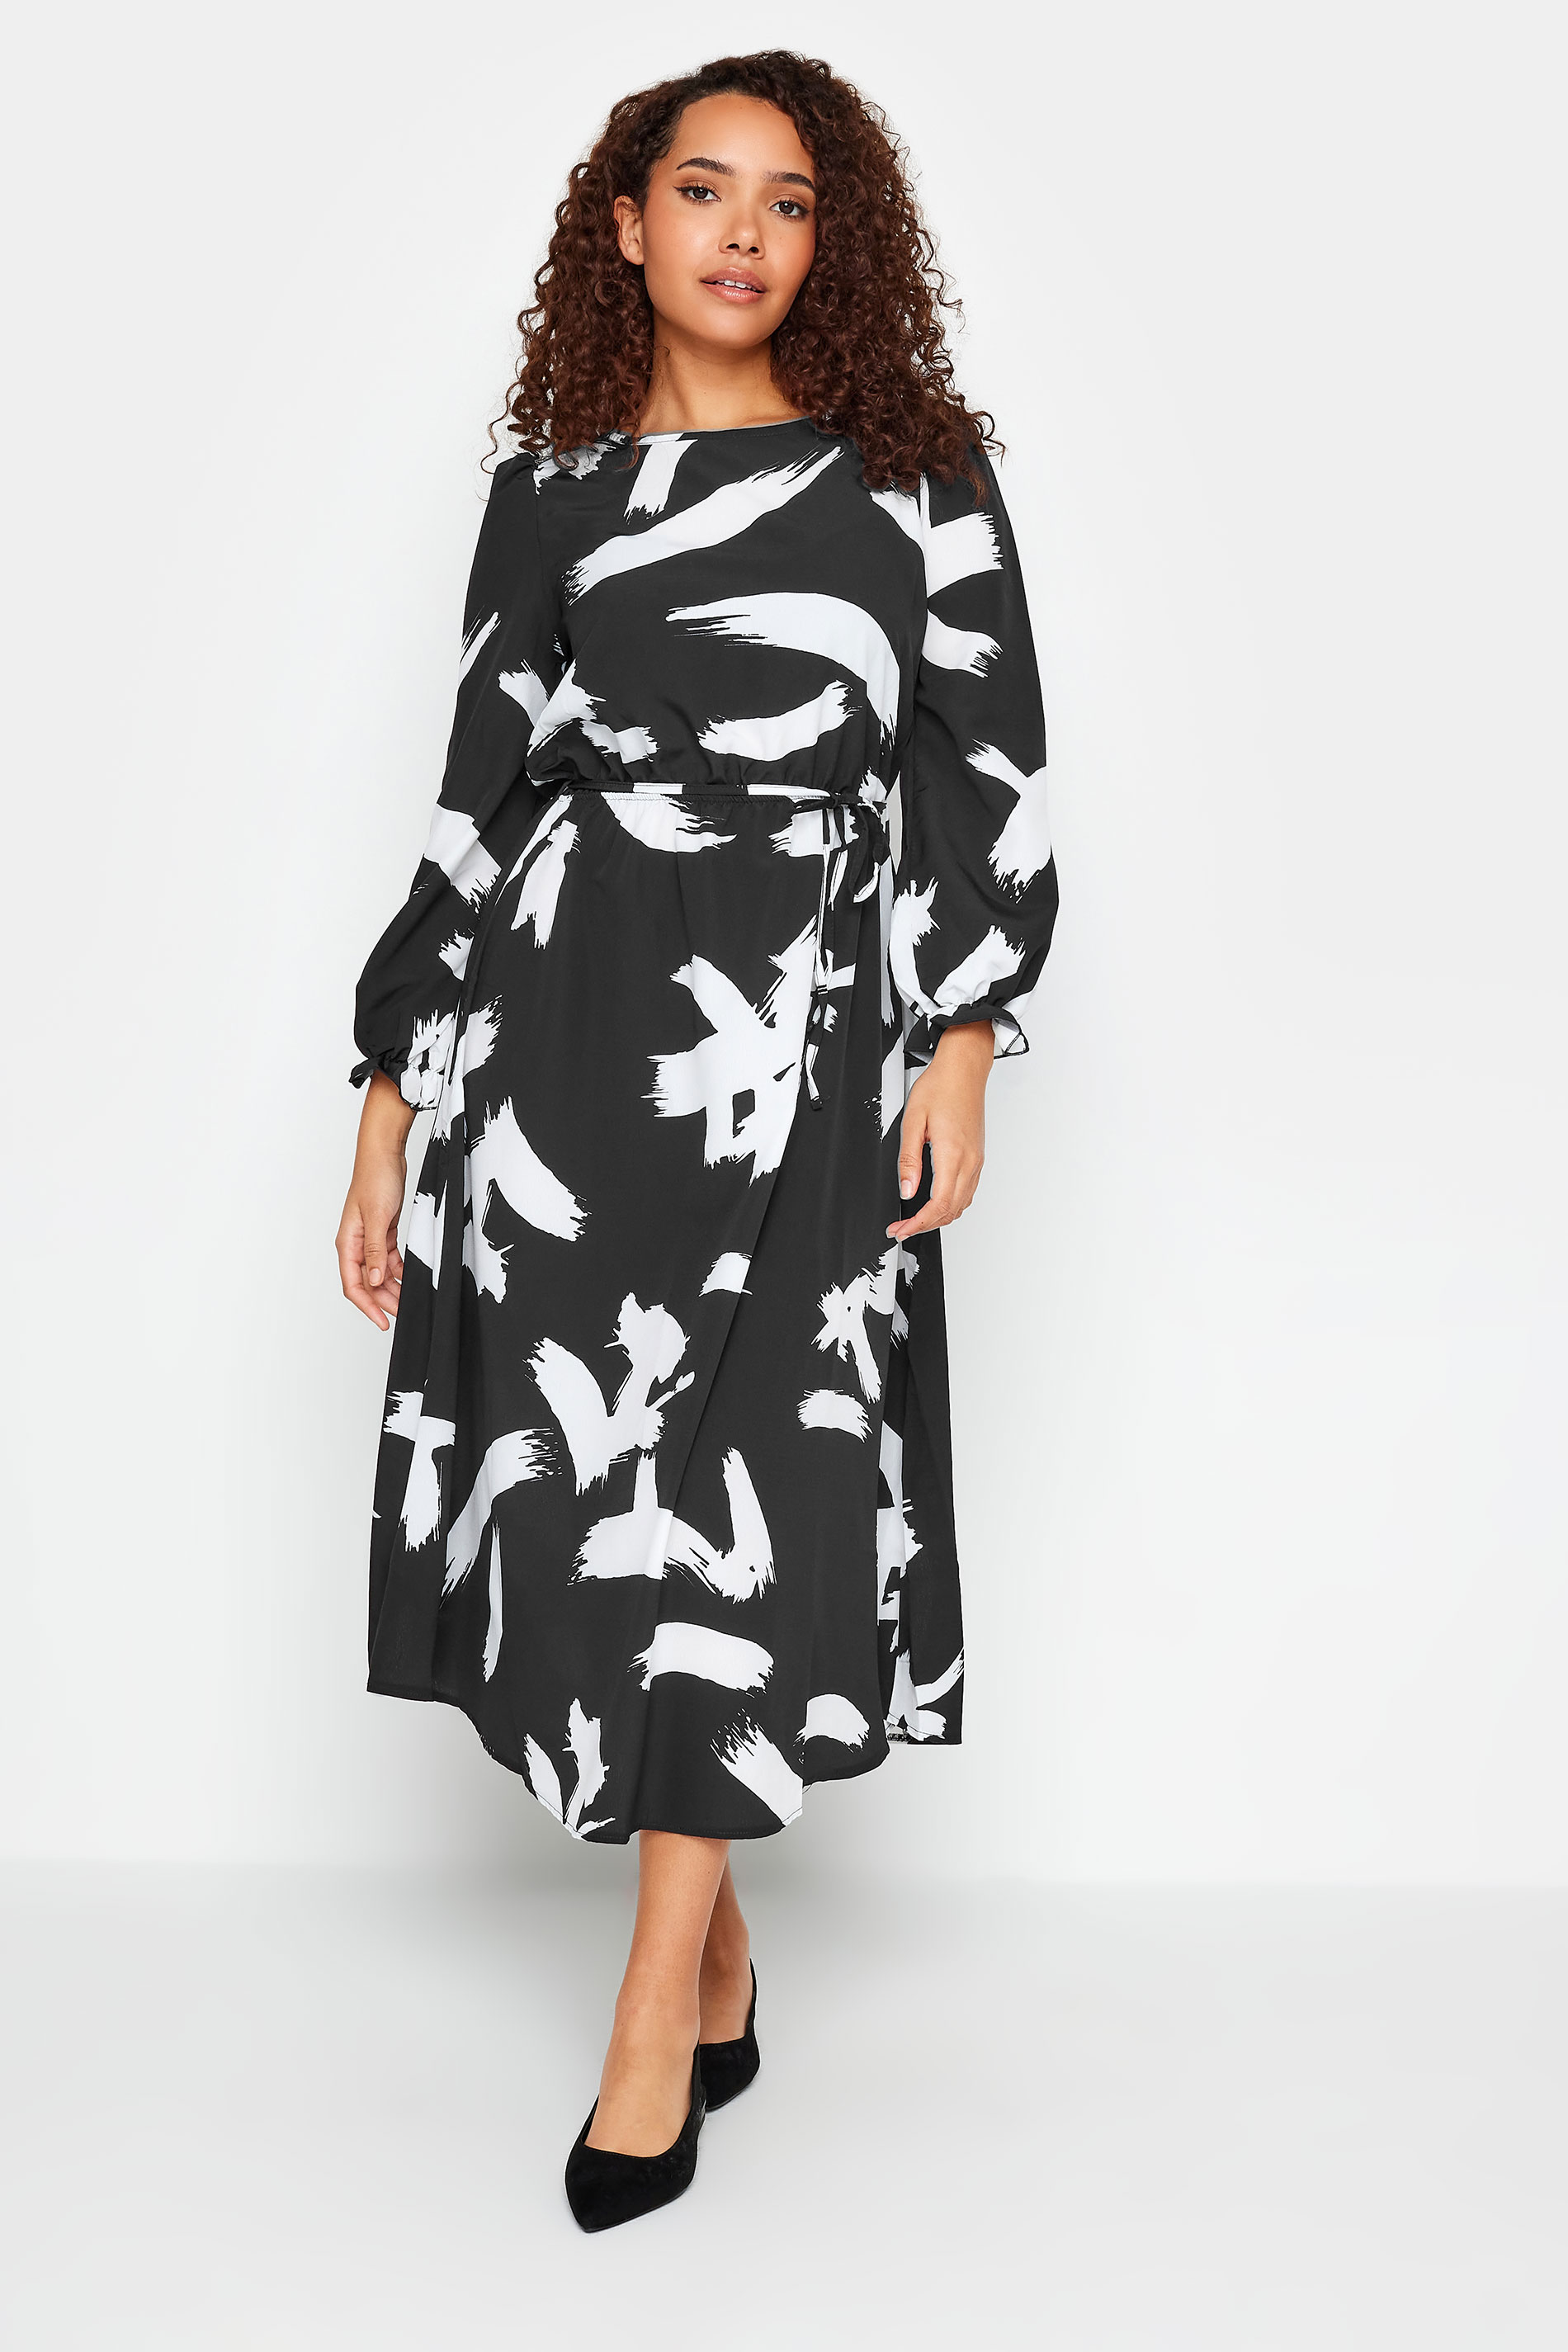 M&Co Black Abstract Print Smock Dress | M&Co 1